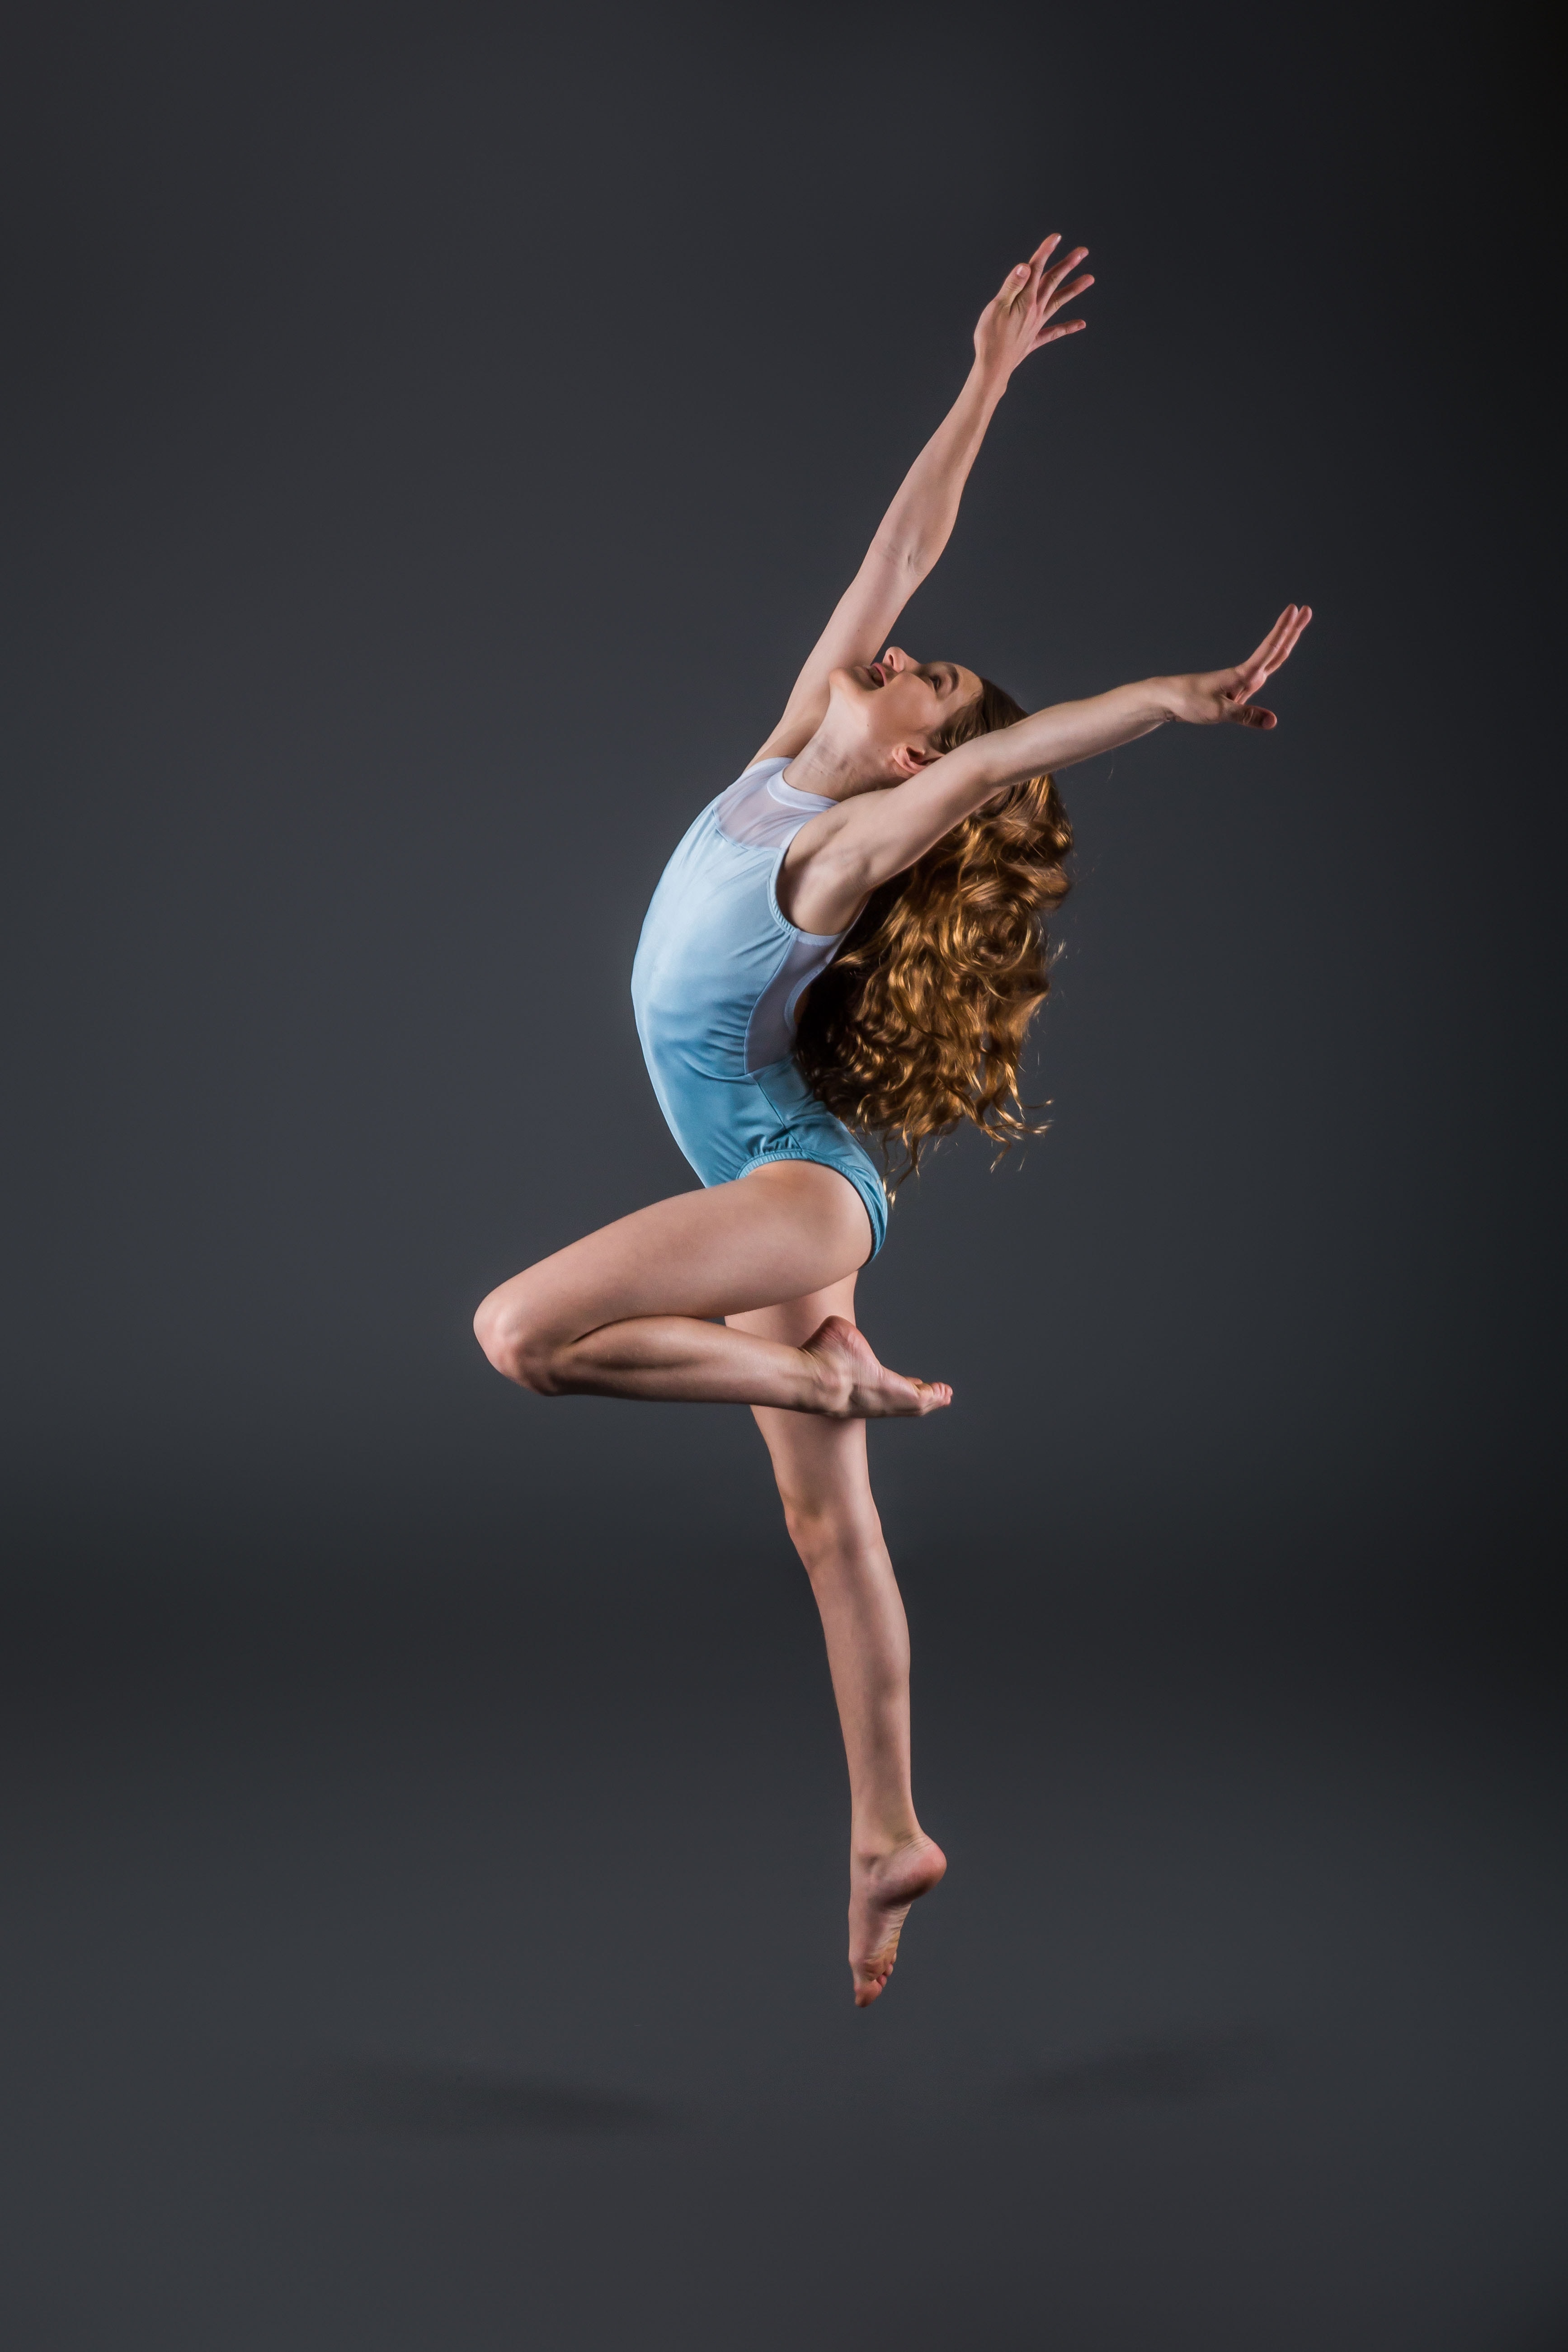 dancer photo in jump